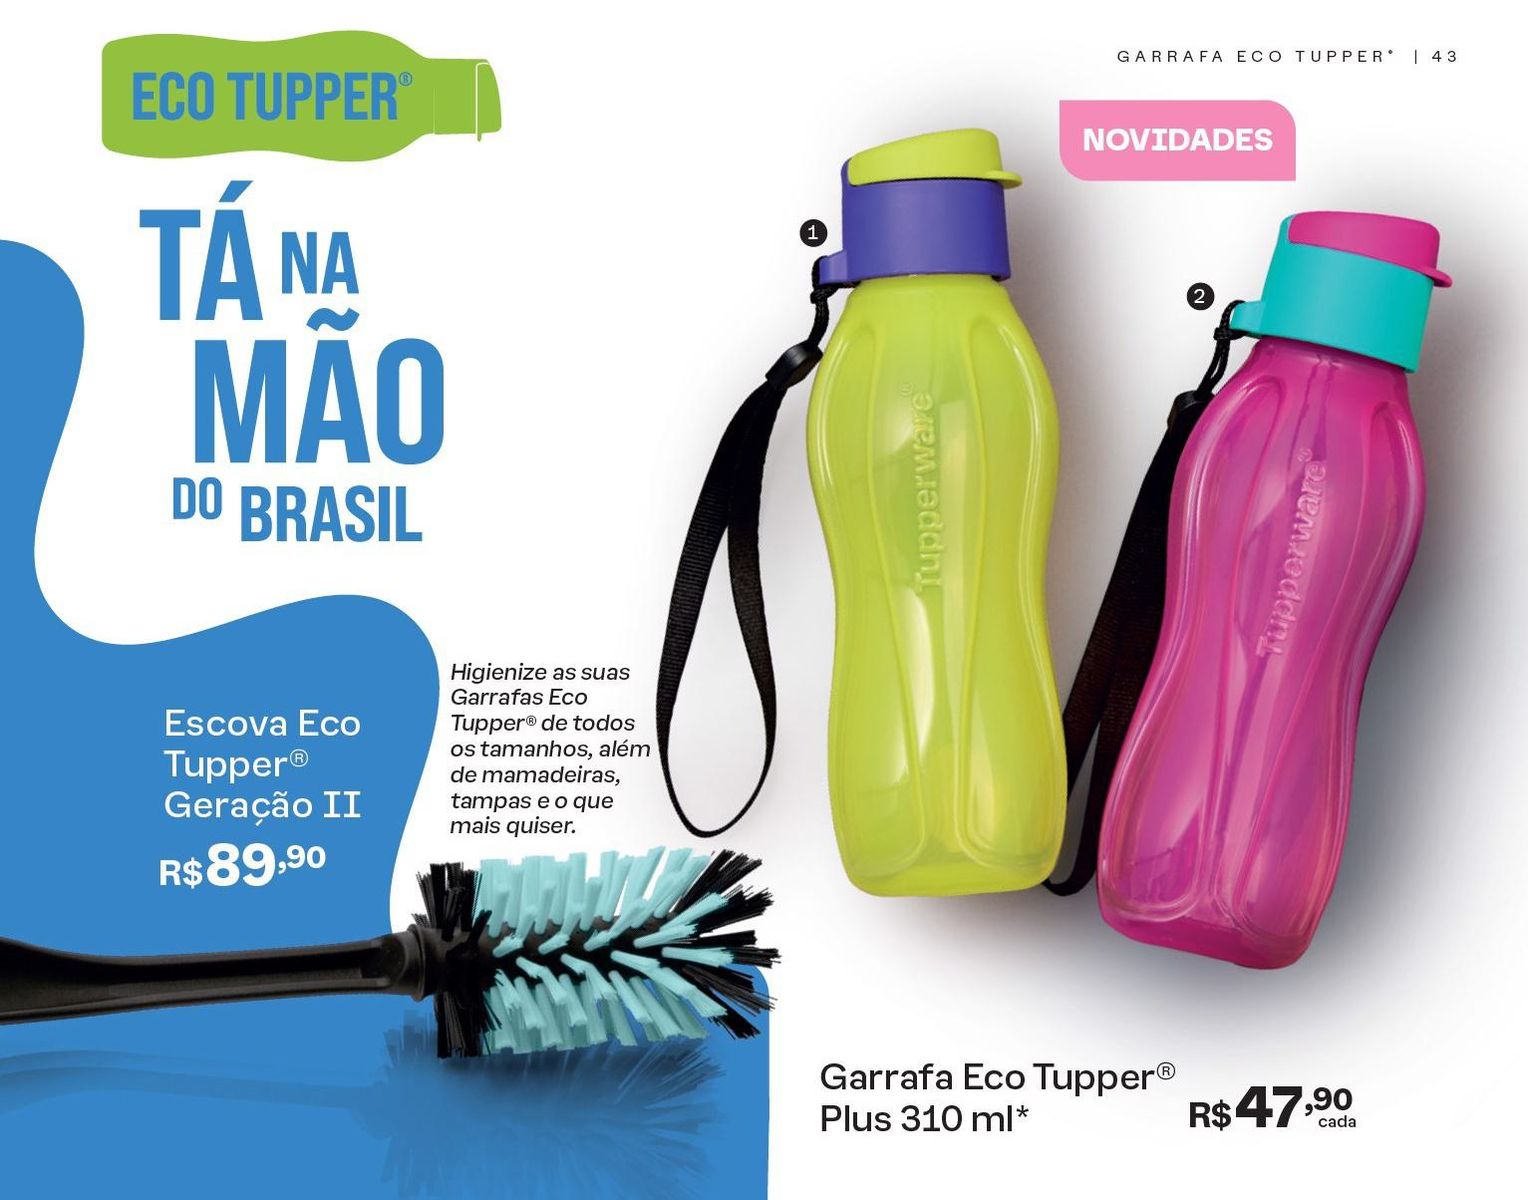 Garrafa Eco Tupper Plus 310 ml - R$47,20